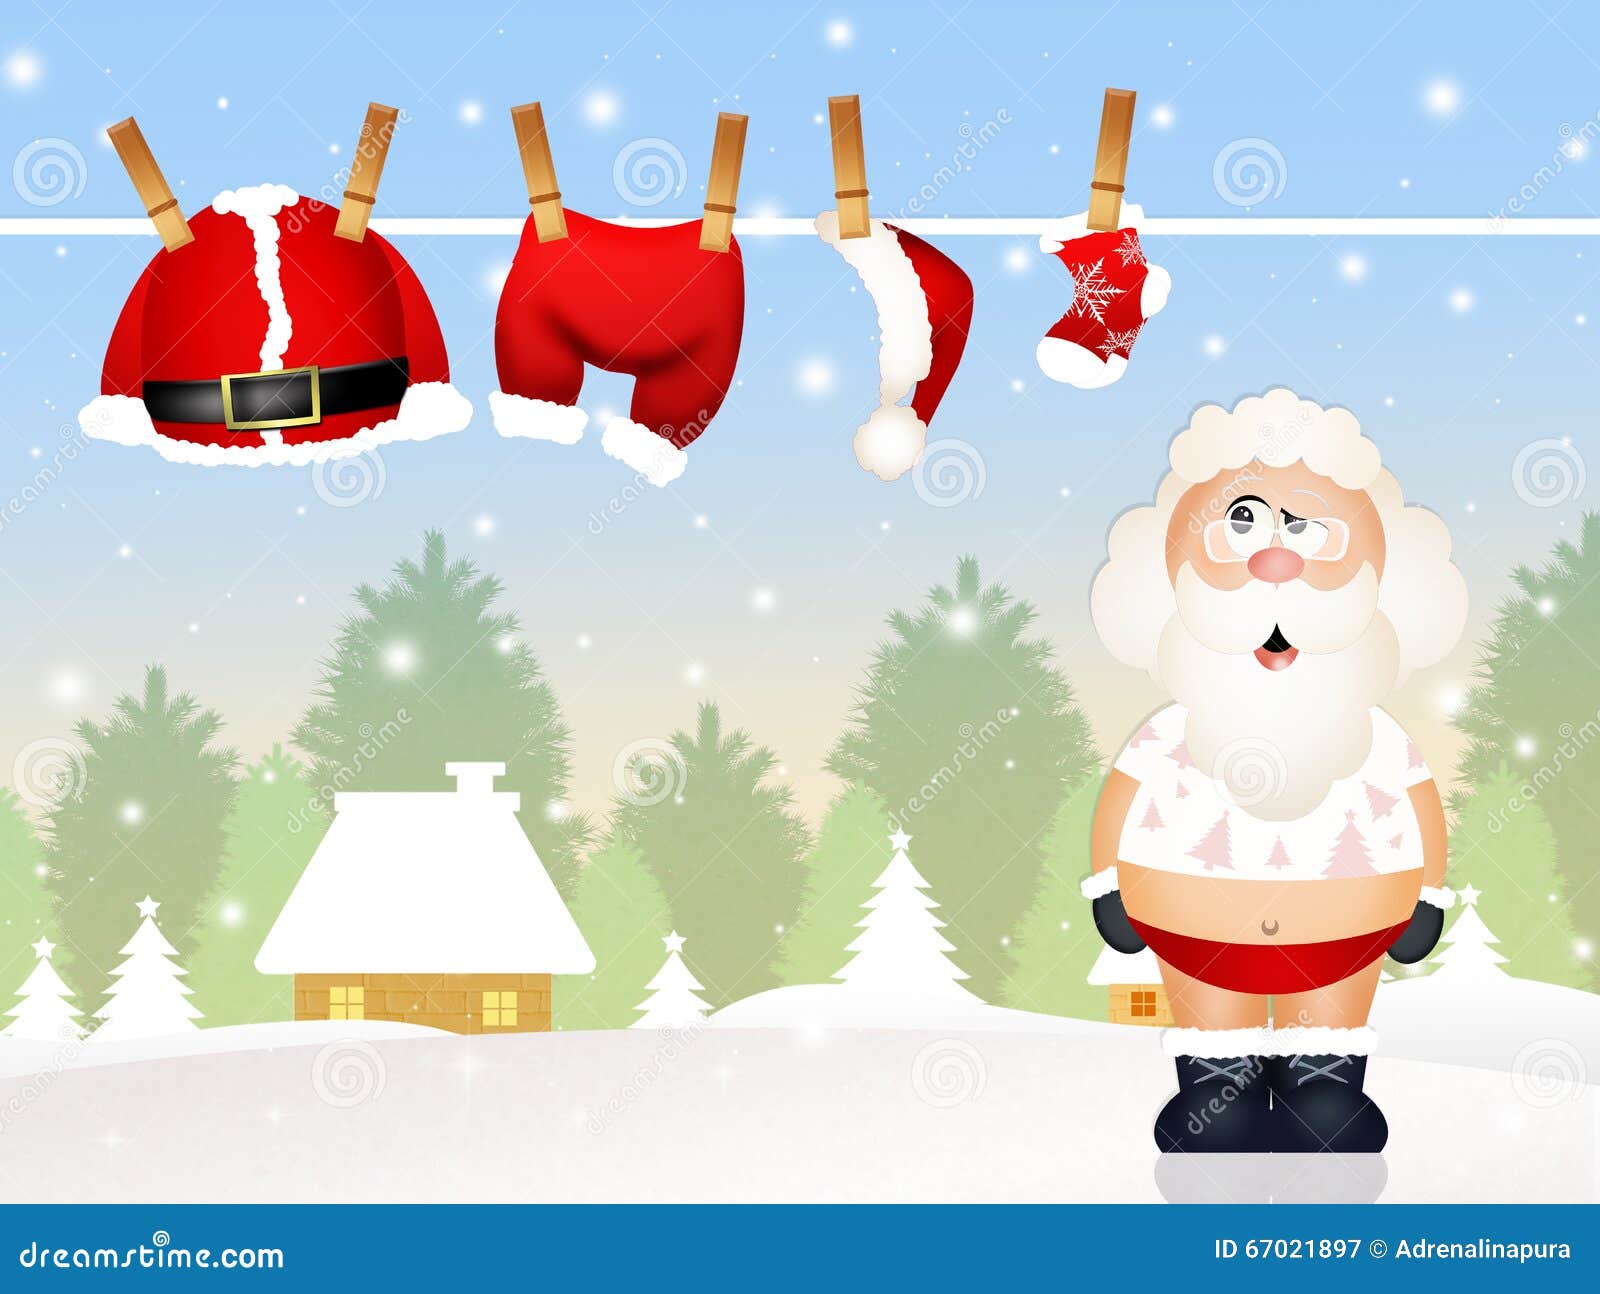 Santa Claus without Clothes Stock Illustration - Illustration of  celebration, event: 67021897